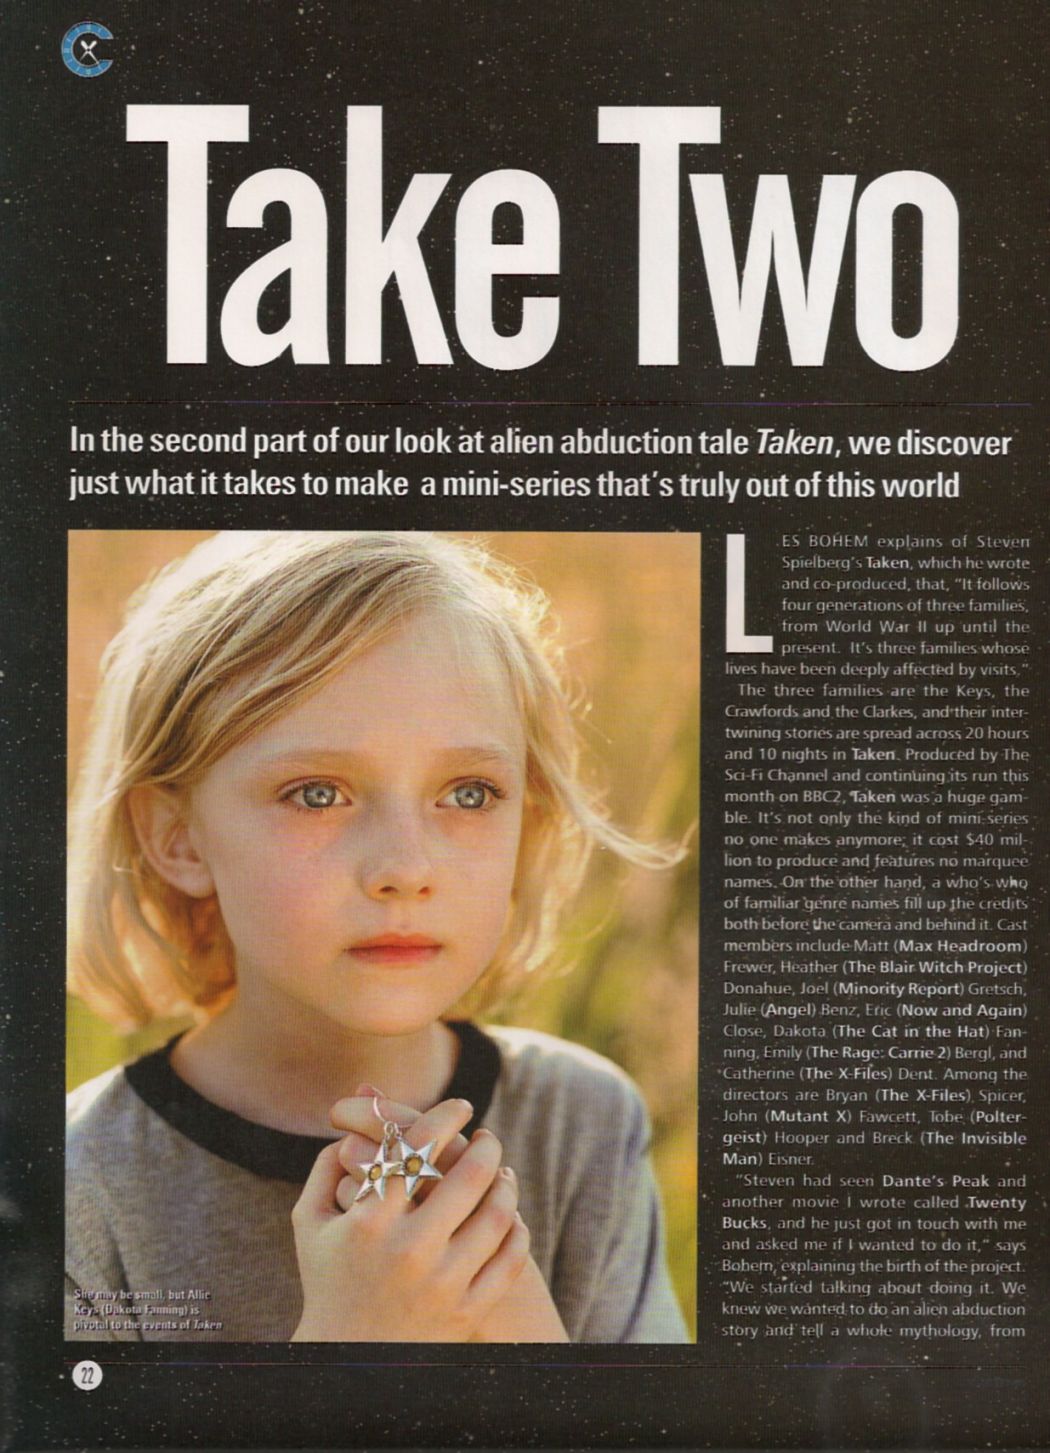 Cult Times #89 - Feb 2003 - Page 1
Keywords: ;taken_media